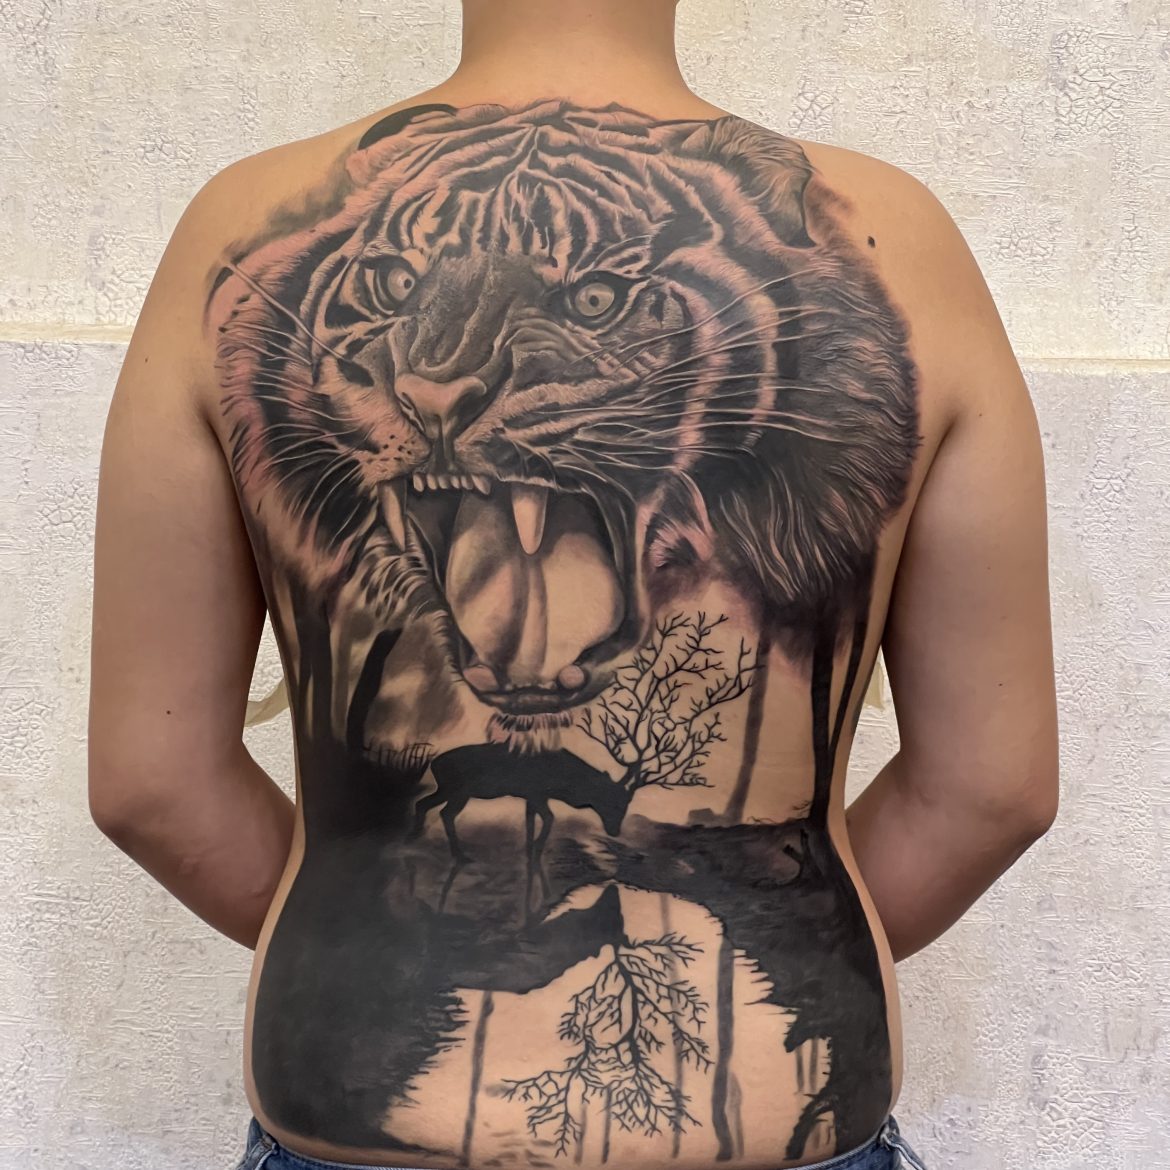 The best tattoo artist in Goa is no doubt its RKS Tattoo -